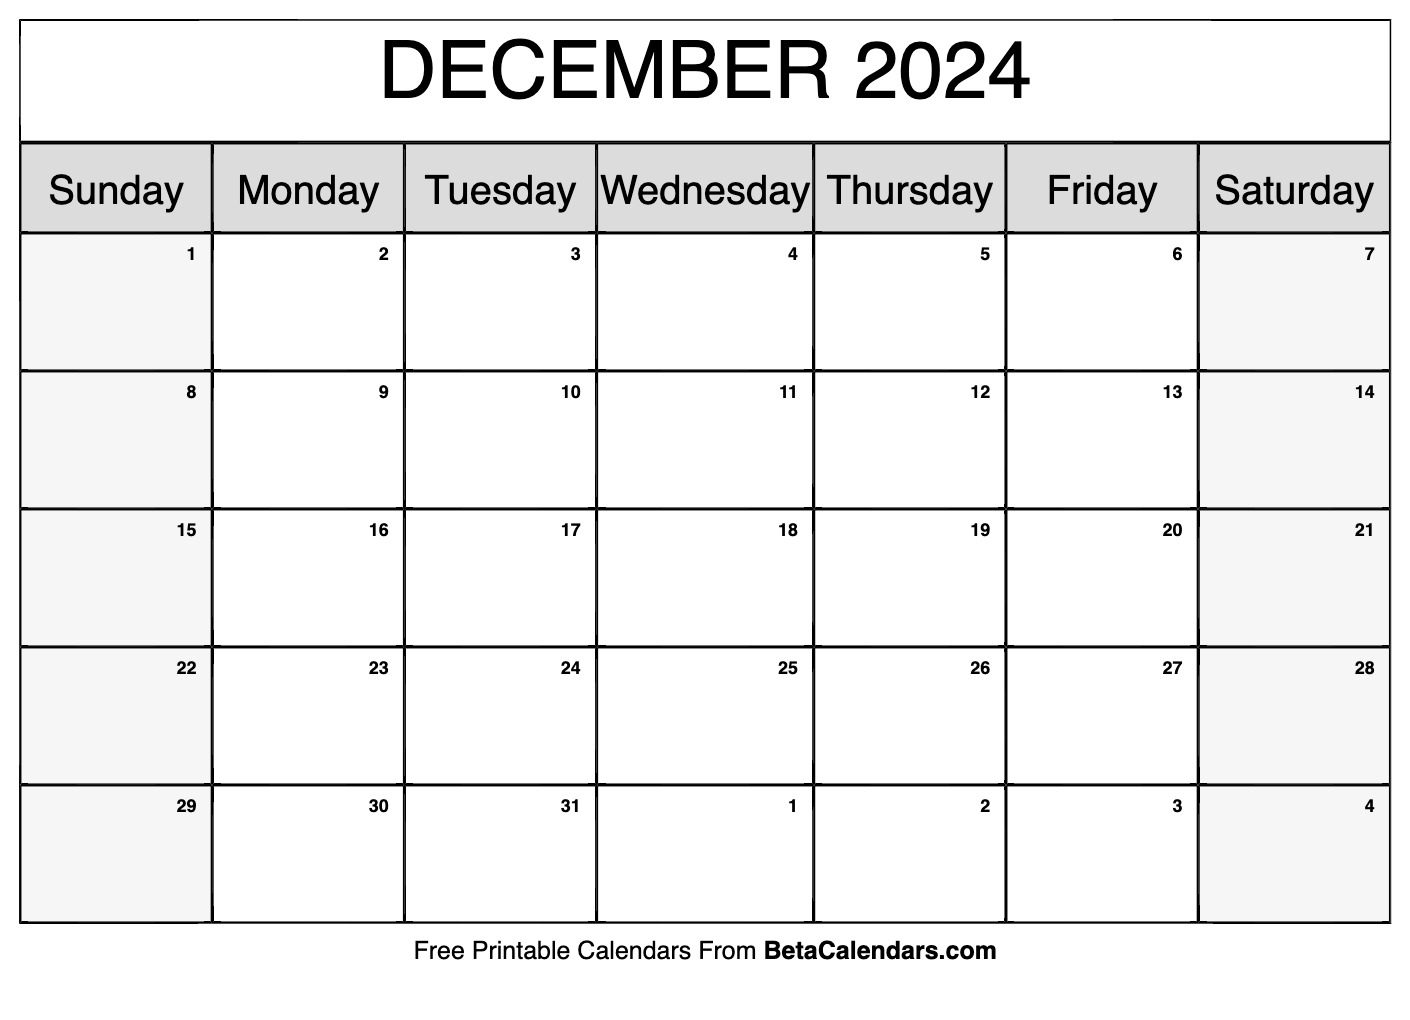 December 2024 Calendar Printable